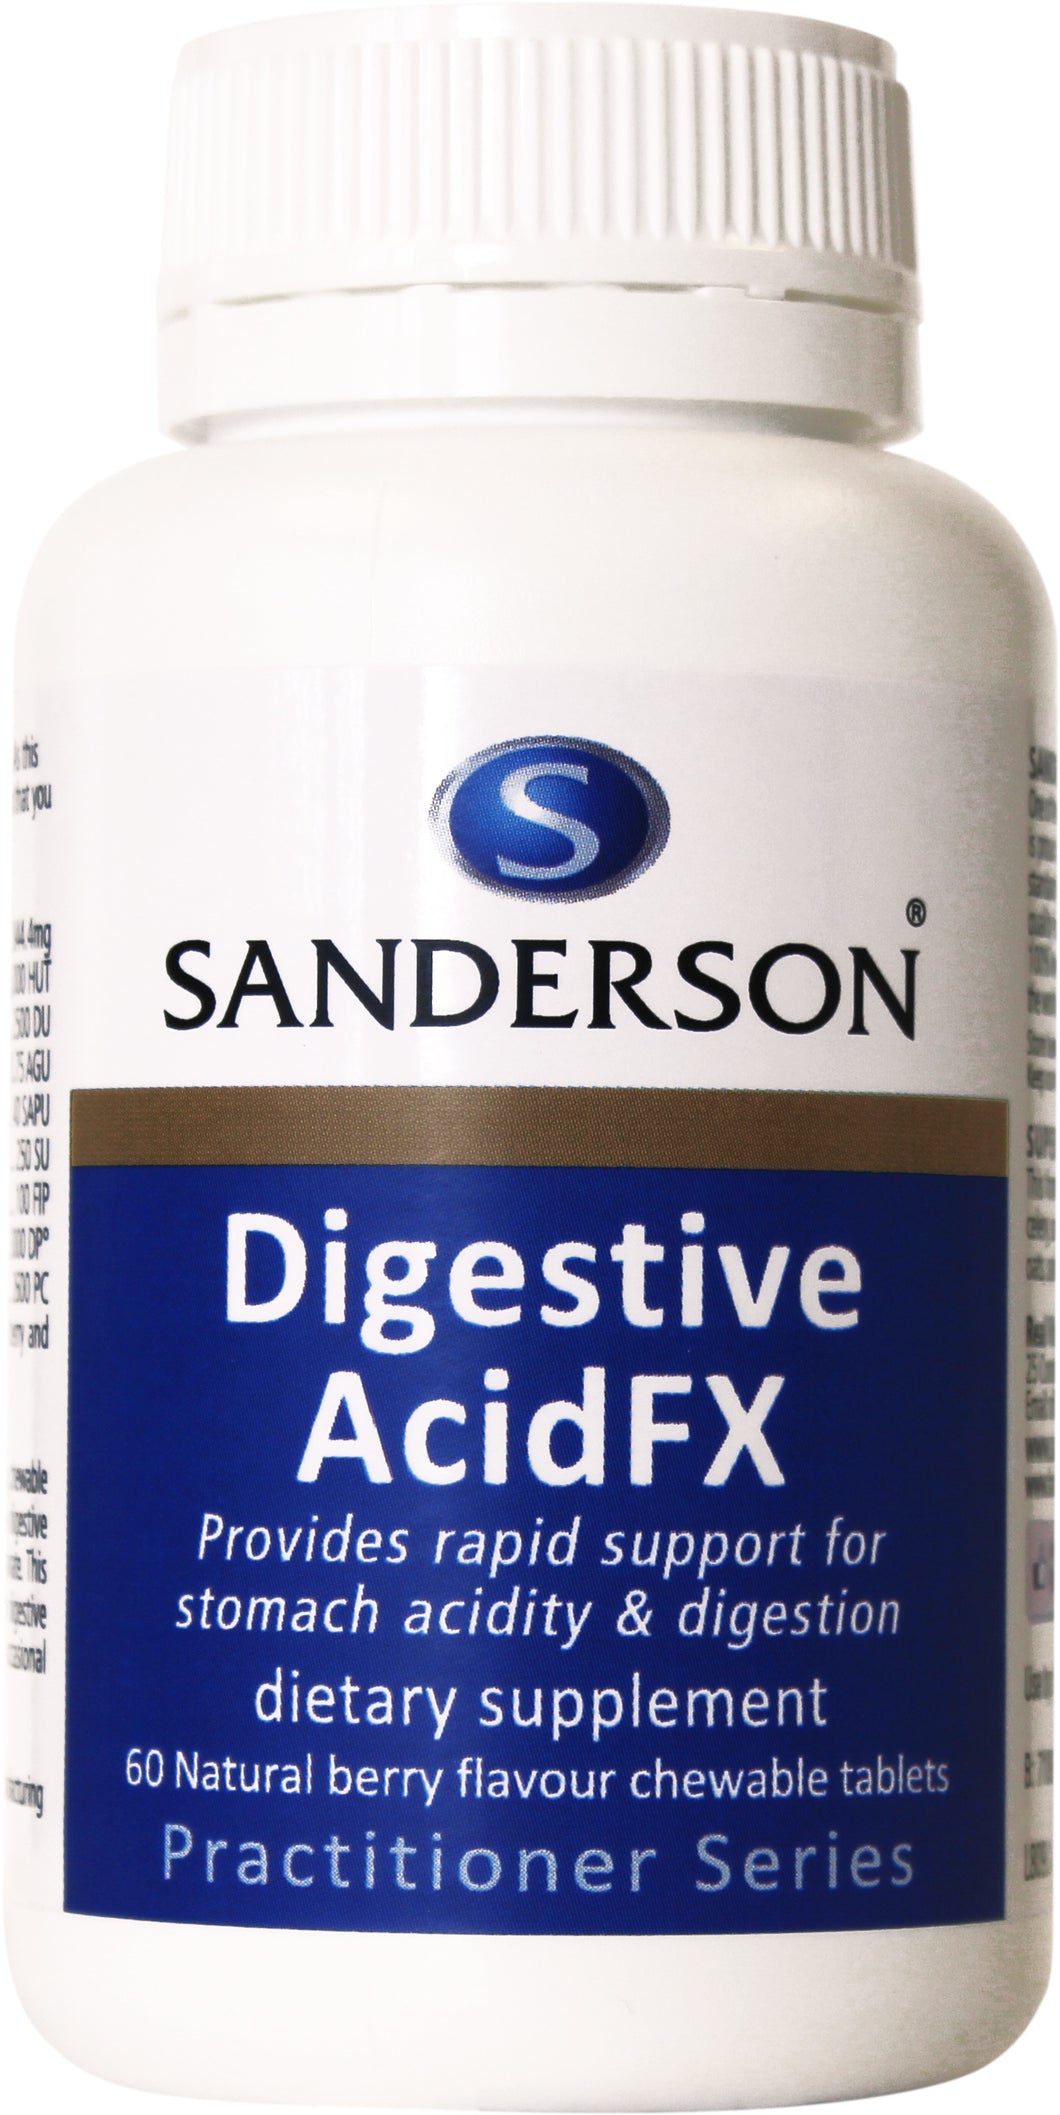 Digestive Acid FX Chewable Tablets